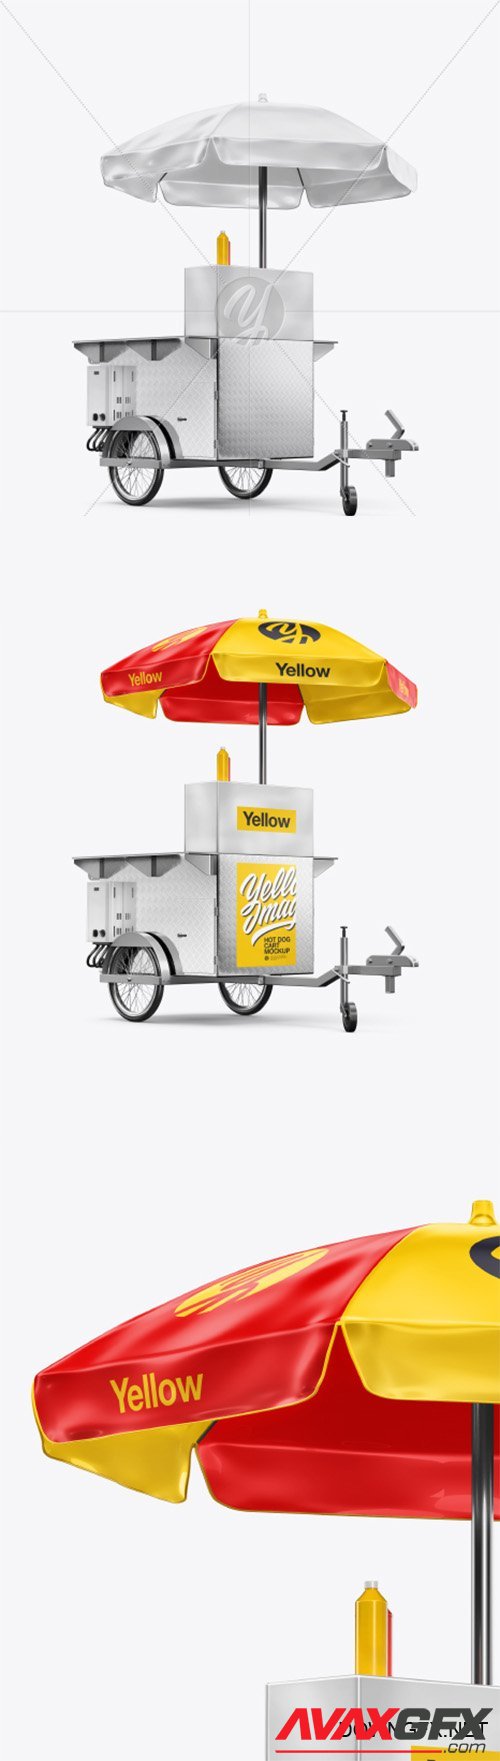 Hot Dog Cart Mockup - Half-Side View 39409 TIF